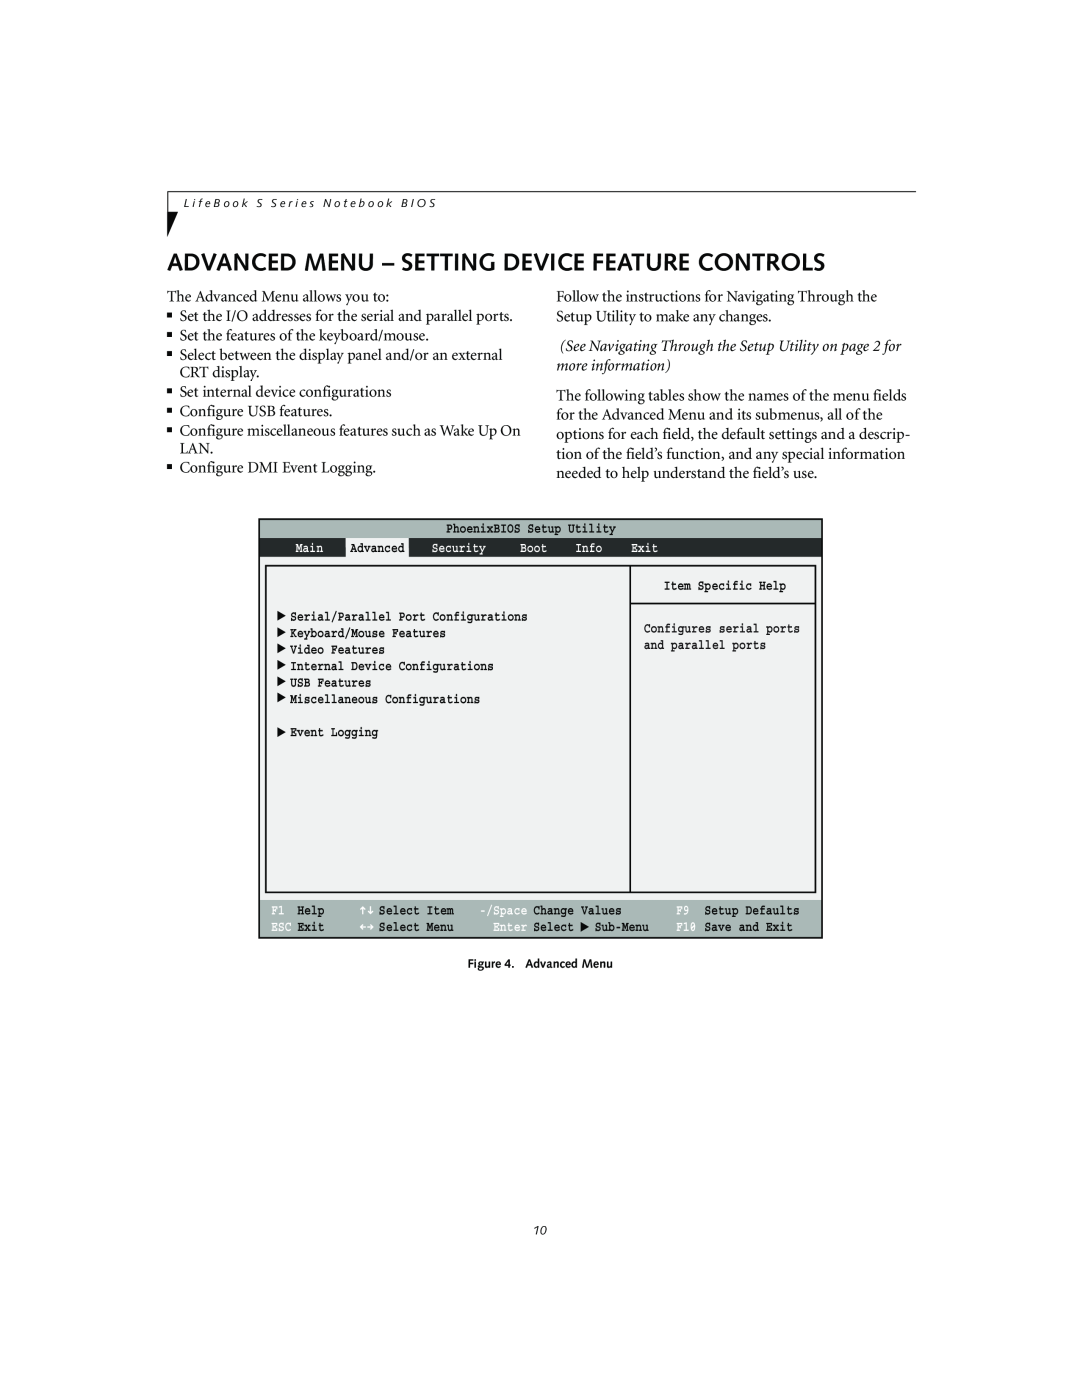 Fujitsu S2010 manual Advanced Menu - Setting Device Feature Controls 